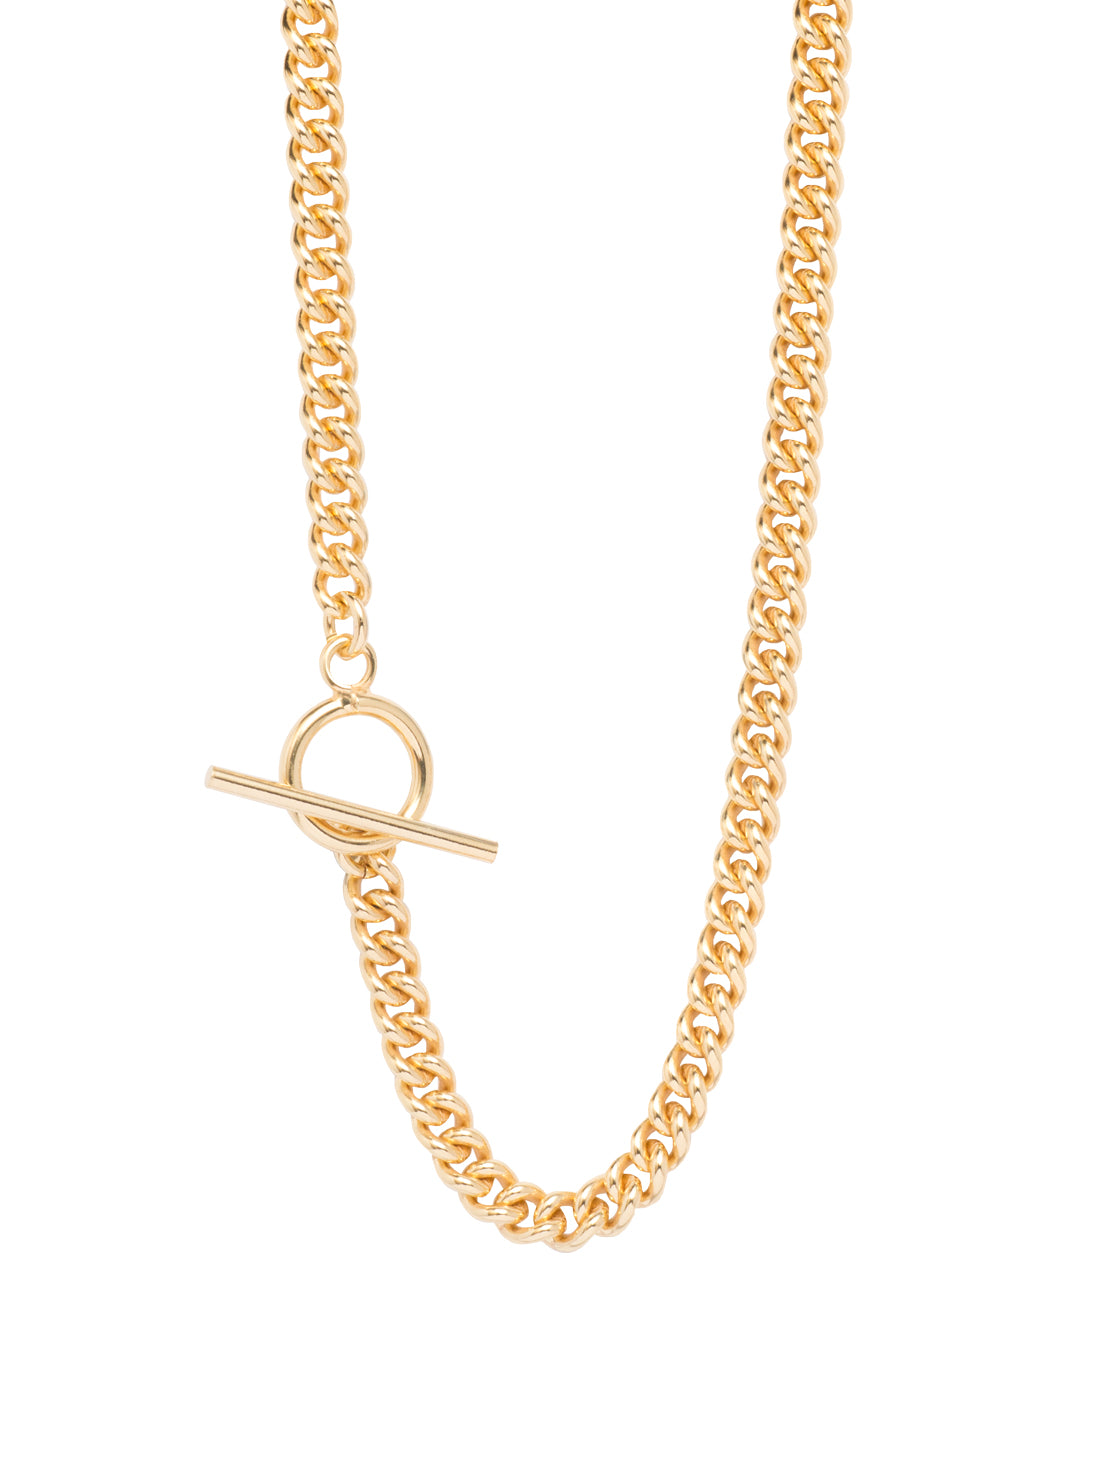 Tilly Sveaas gold T-Bar curb link necklace